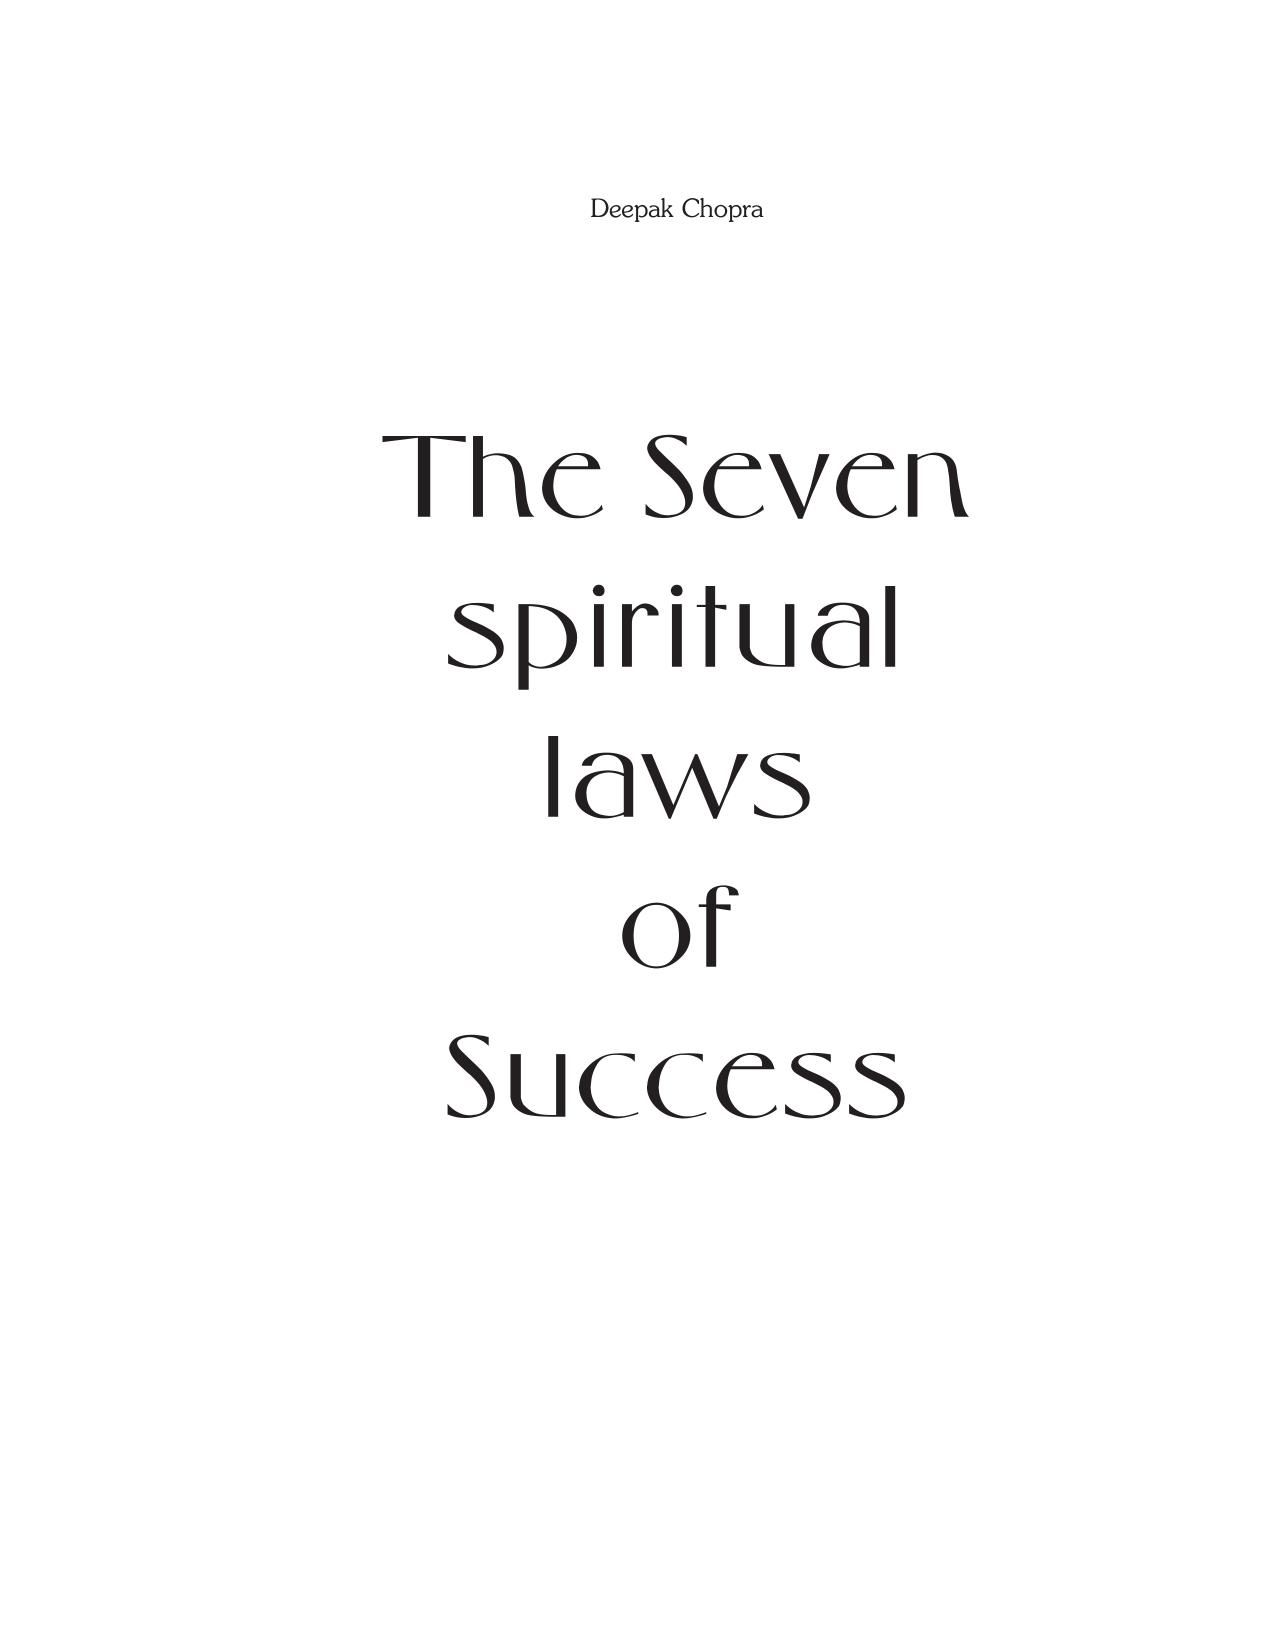 Applying the 7 Laws of Spiritual Success